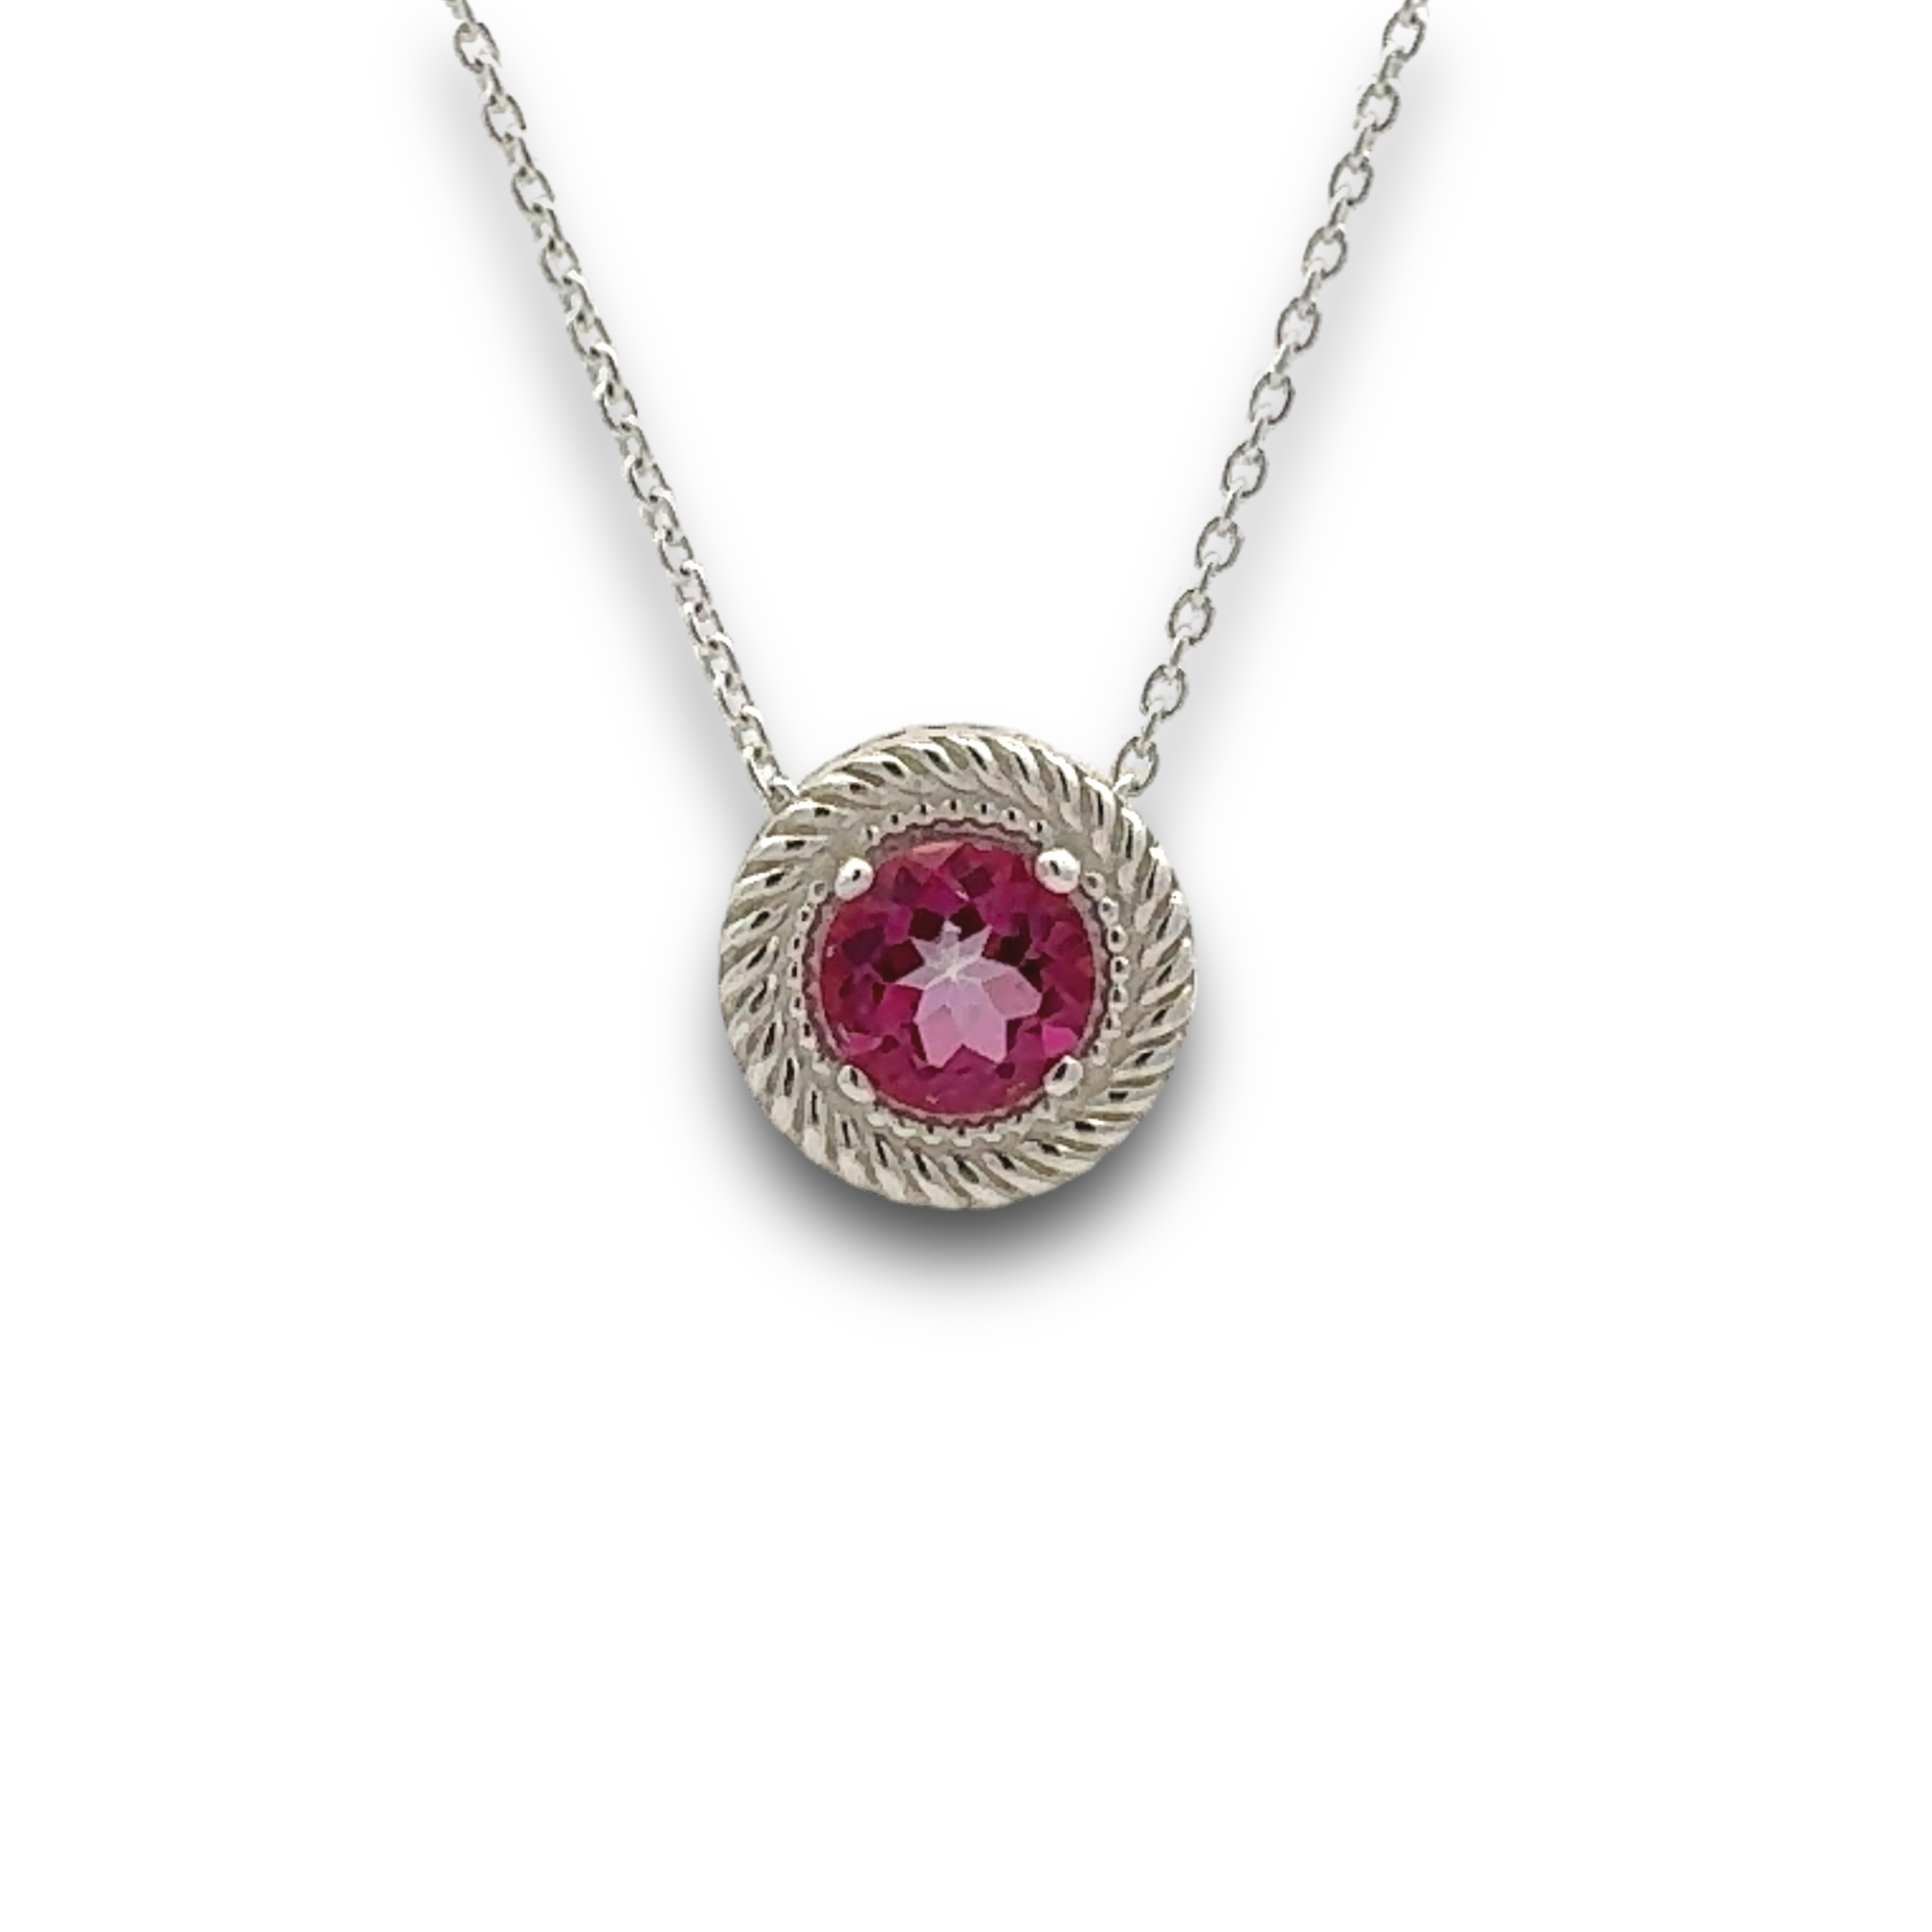 Celestina Pink Topaz Necklace in Sterling Silver